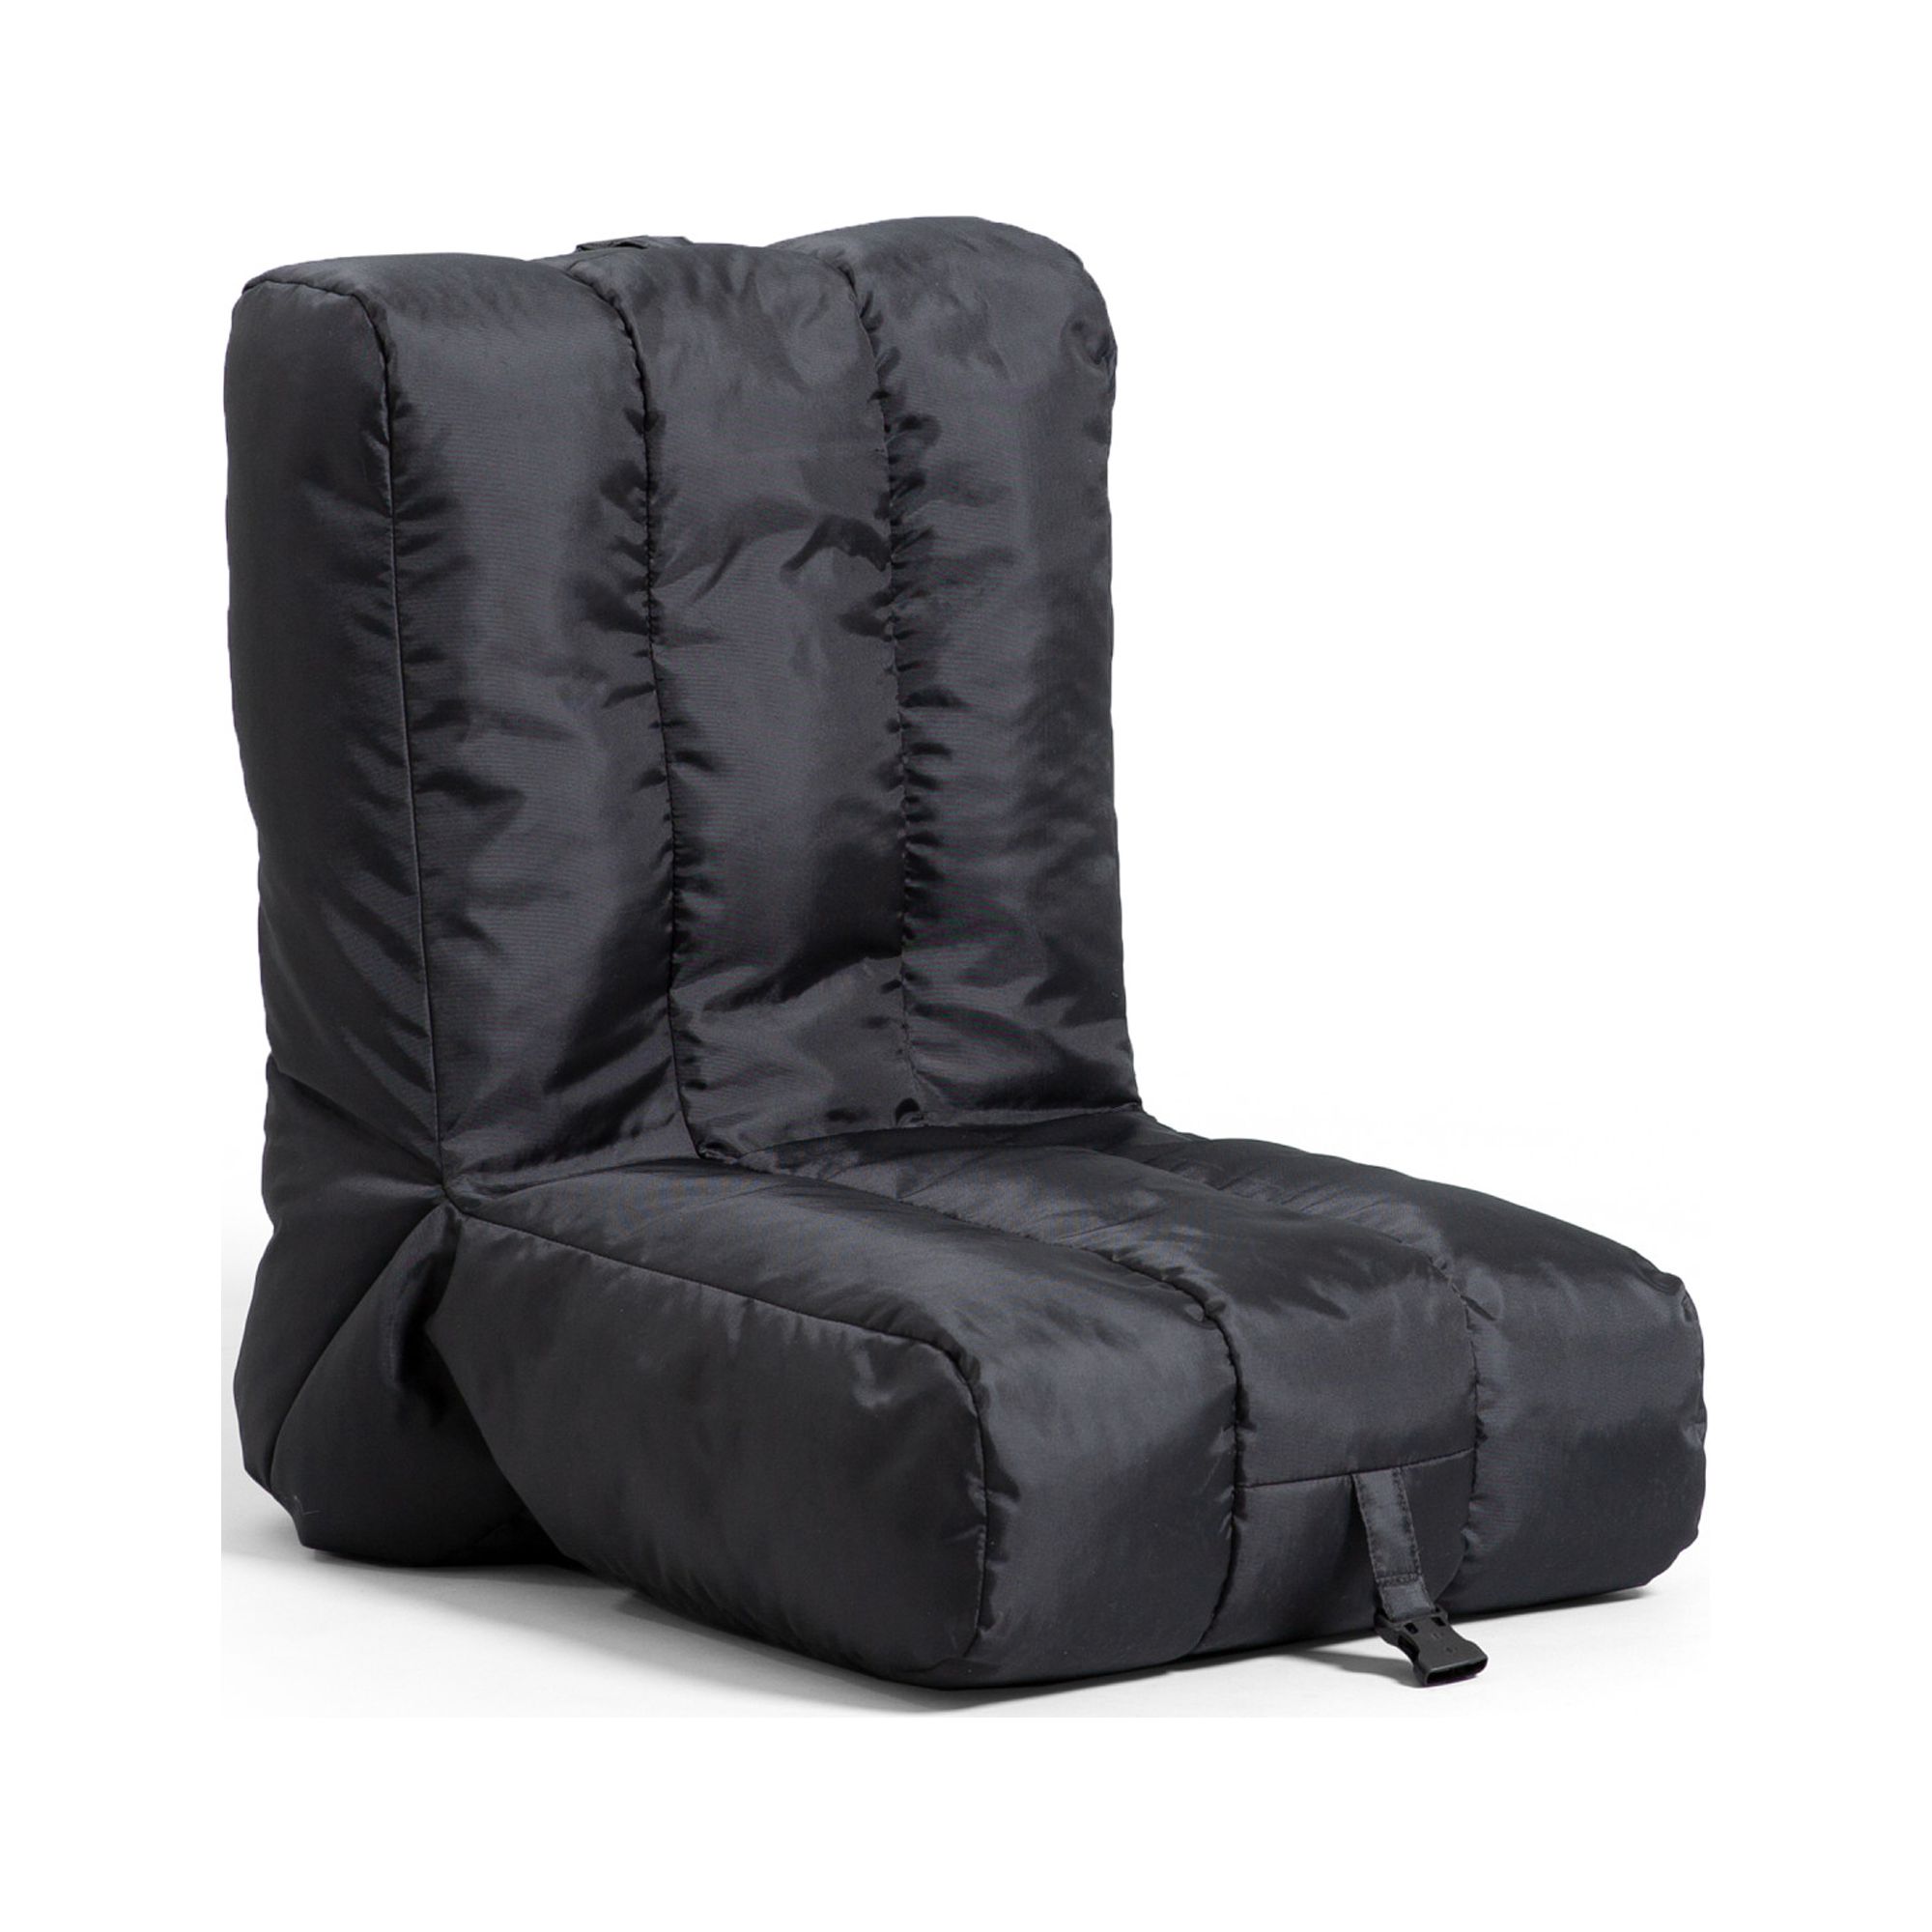 Big Joe Grab & Go Travel Bean Bag Chair, Black SmartMax, Durable Polyester Nylon Blend, 1.5 feet - image 2 of 9